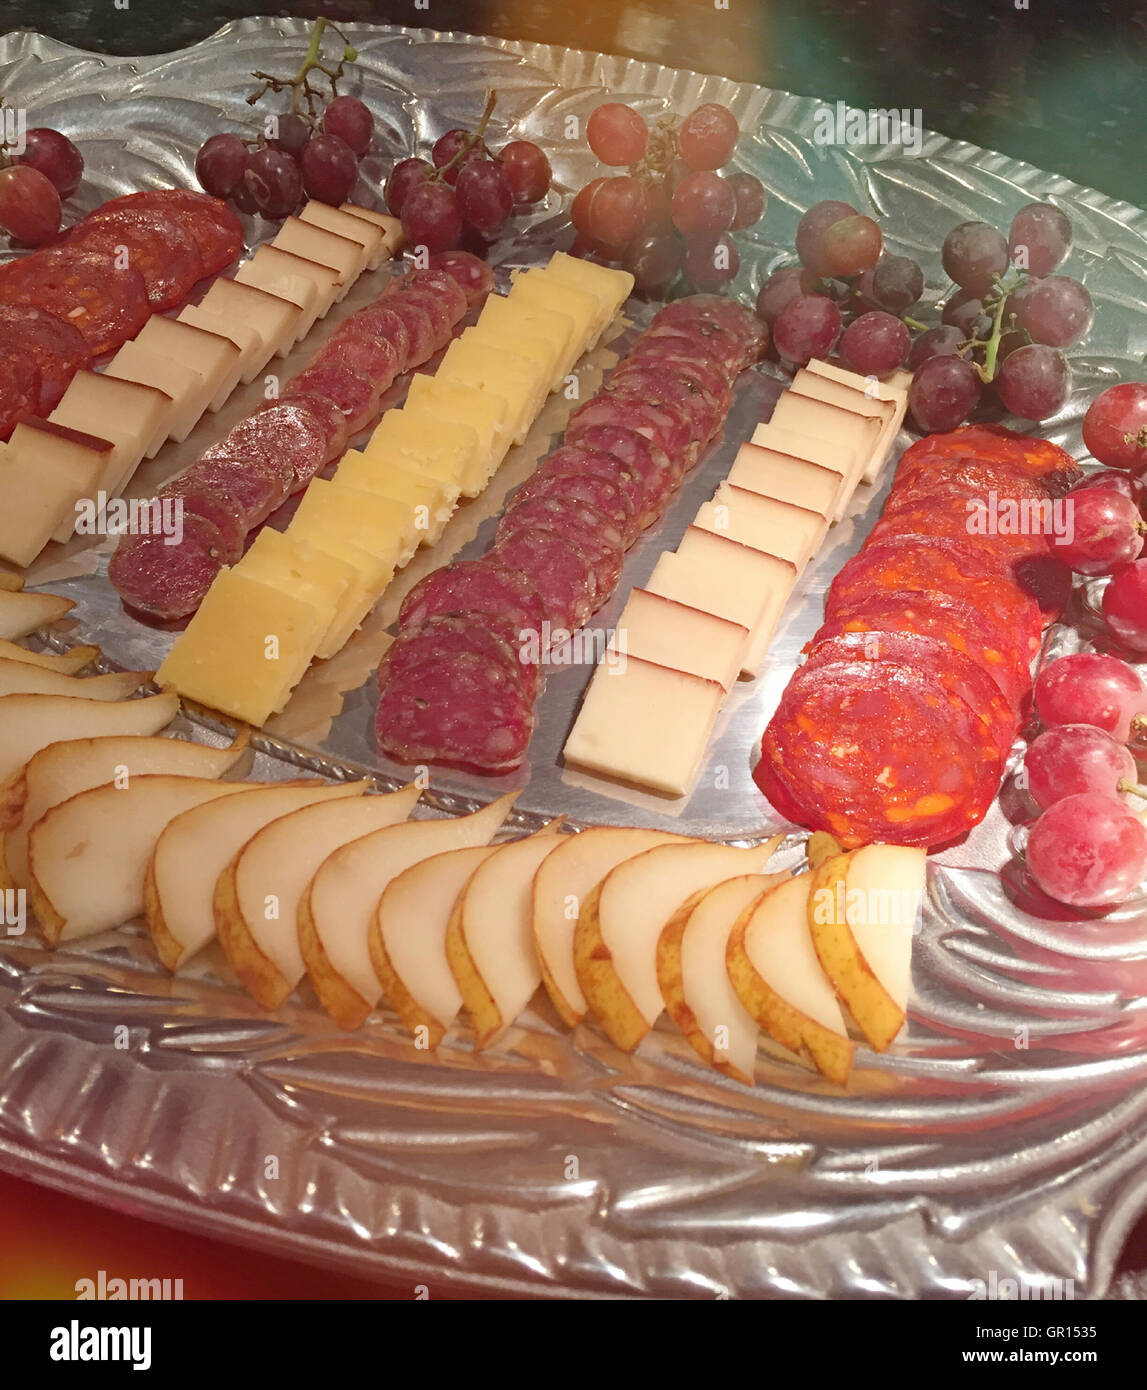 Salami, fromage et fruits Snack-Plateau, Cocktail, USA Banque D'Images